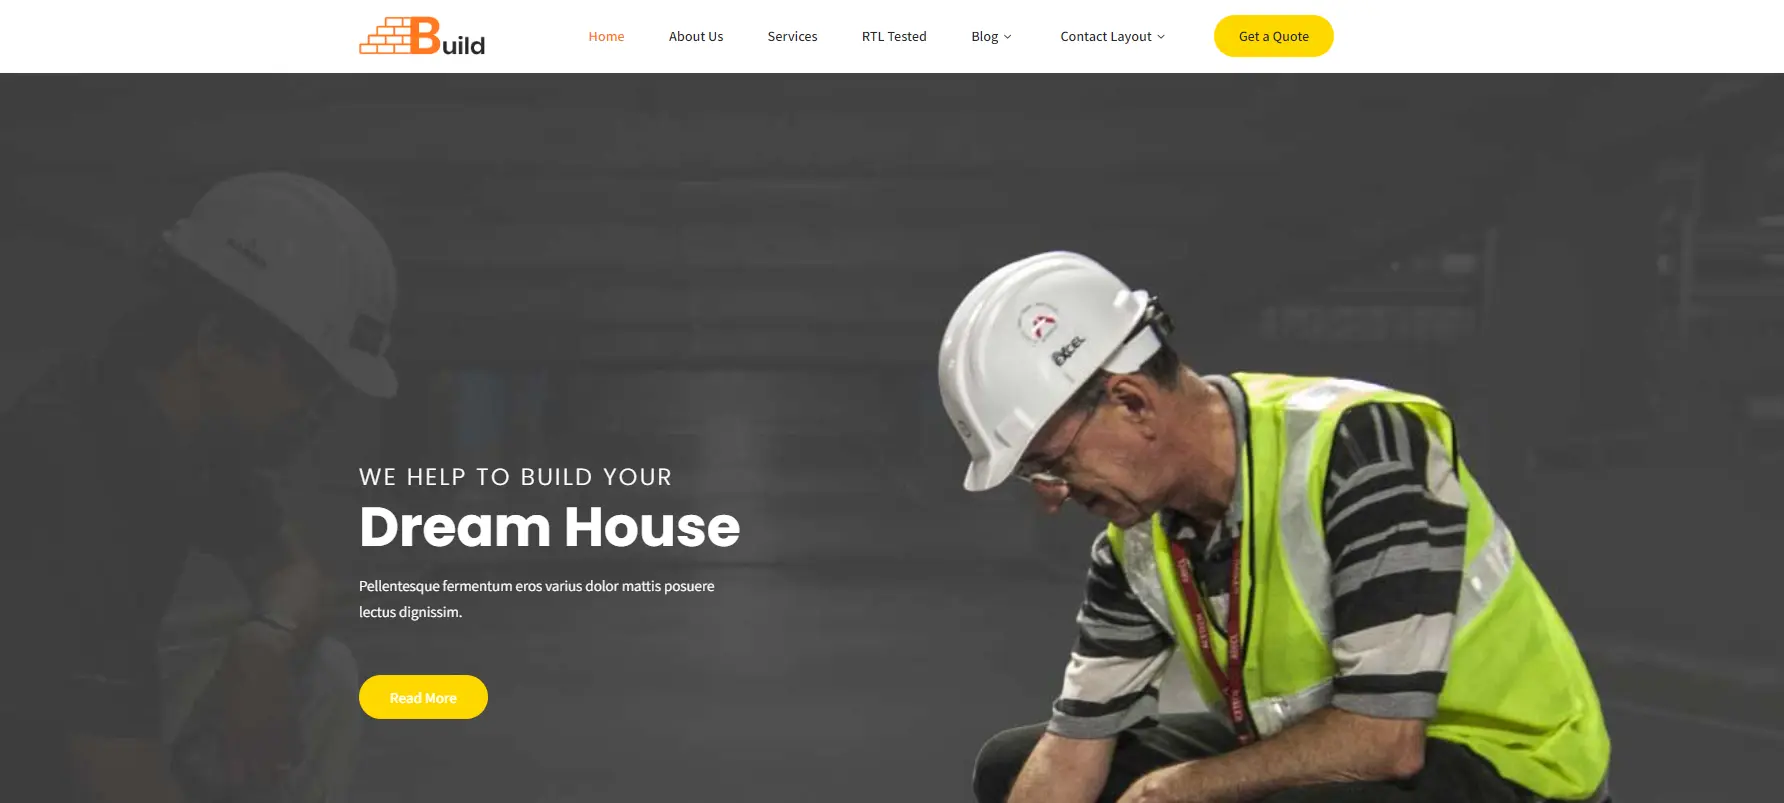 Build WordPress Theme For Construction Companies